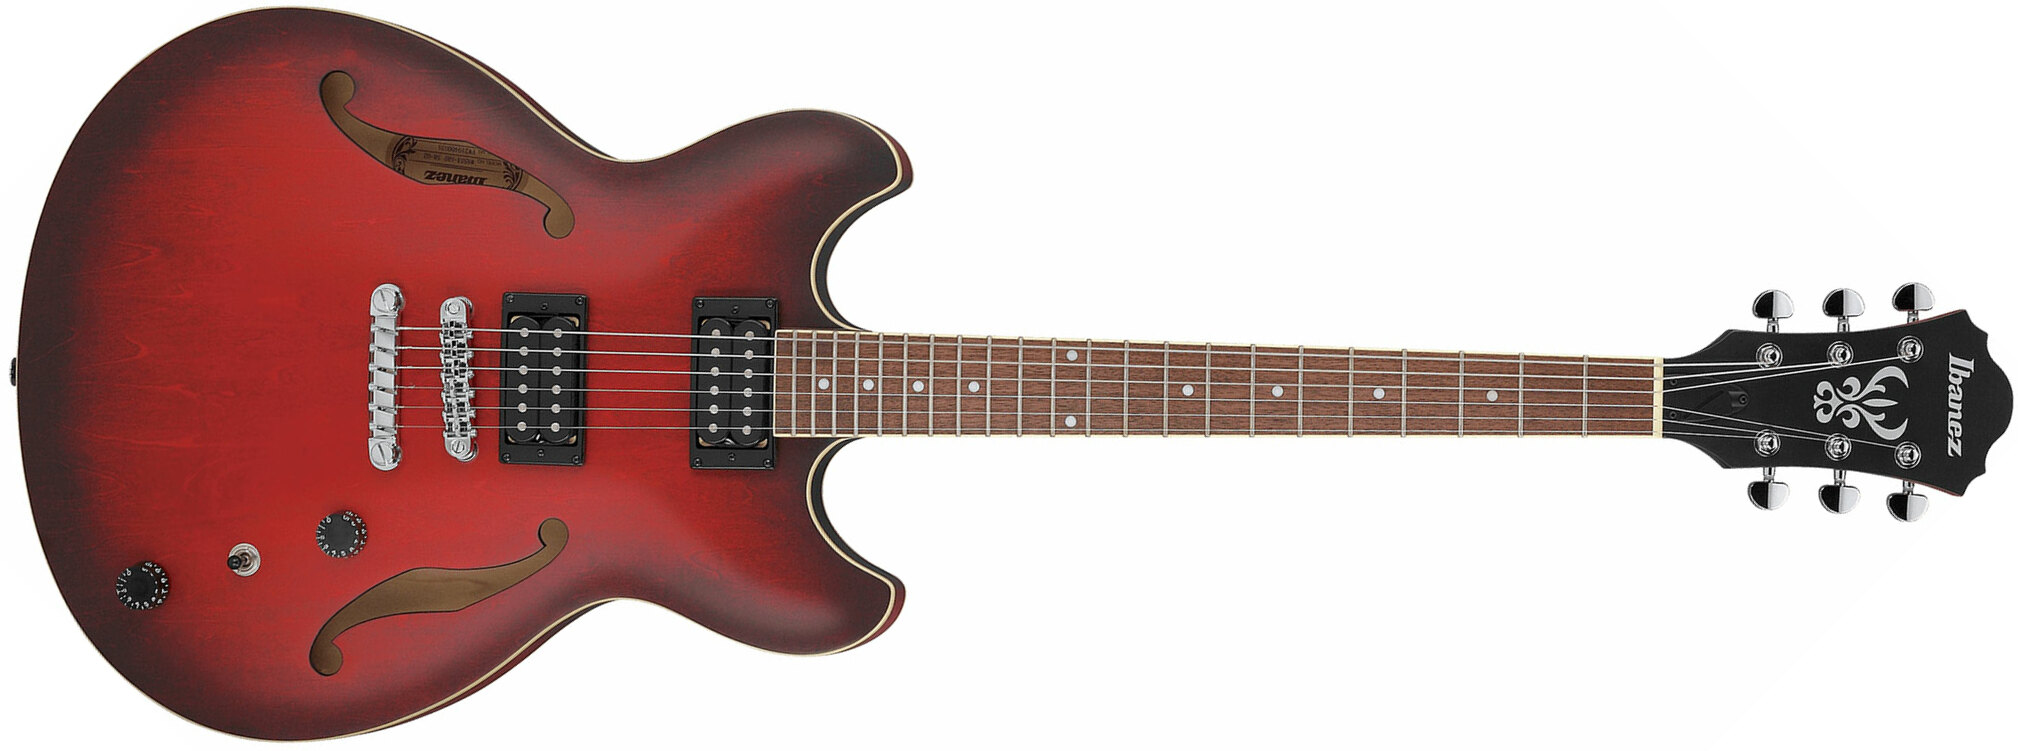 Ibanez As53 Srf Artcore Hh Ht Noy - Sunburst Red Flat - Semi hollow elektriche gitaar - Main picture